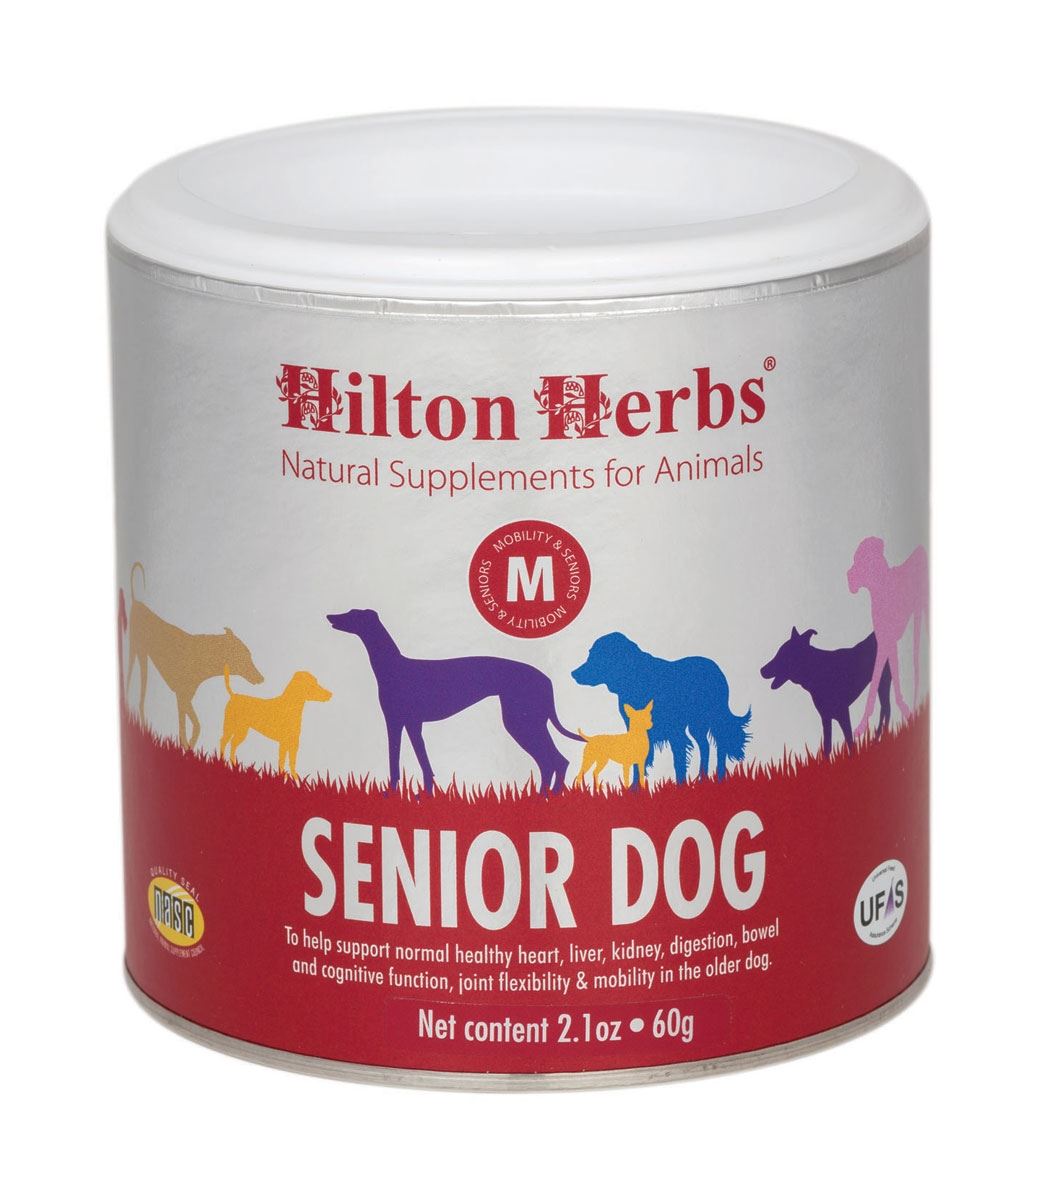 Hilton Herbs Canine Senior Dog - Just Horse Riders